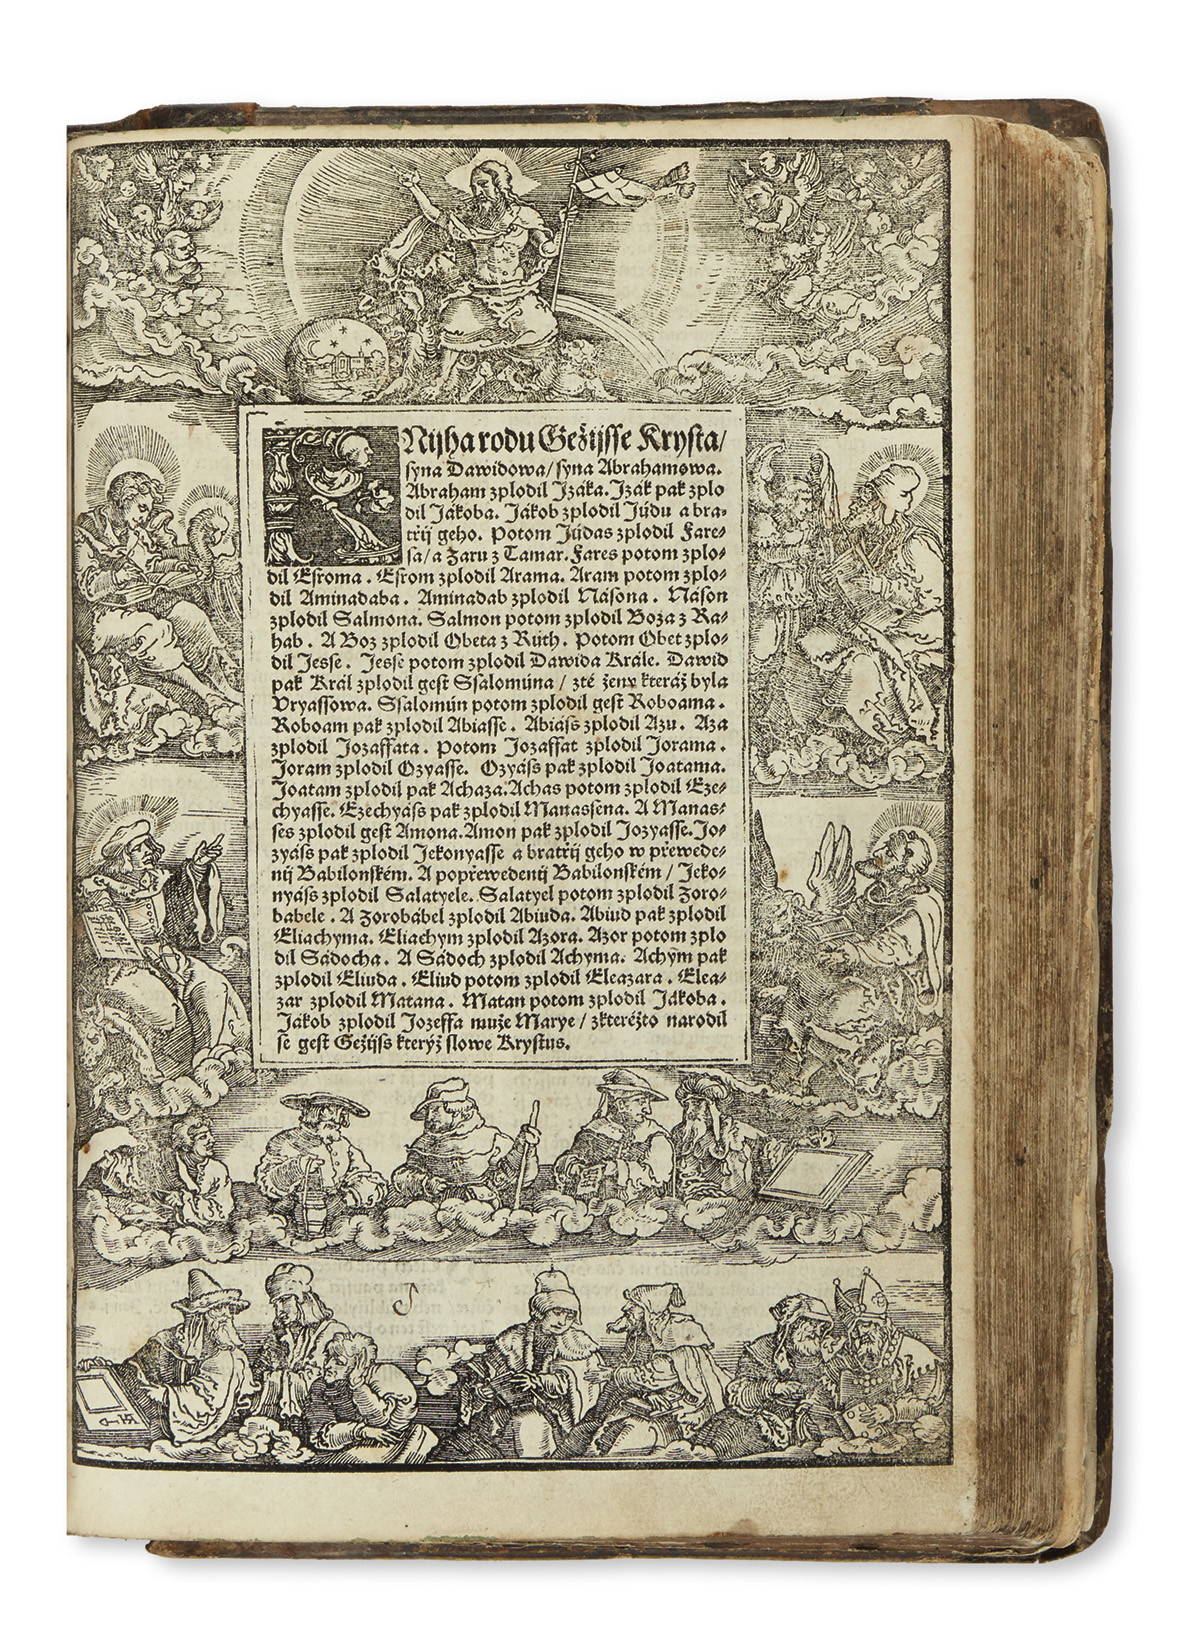 BIBLE IN CZECH.  Biblij Czeska.  1540.  Lacks title, next leaf, and last leaf of table at end.